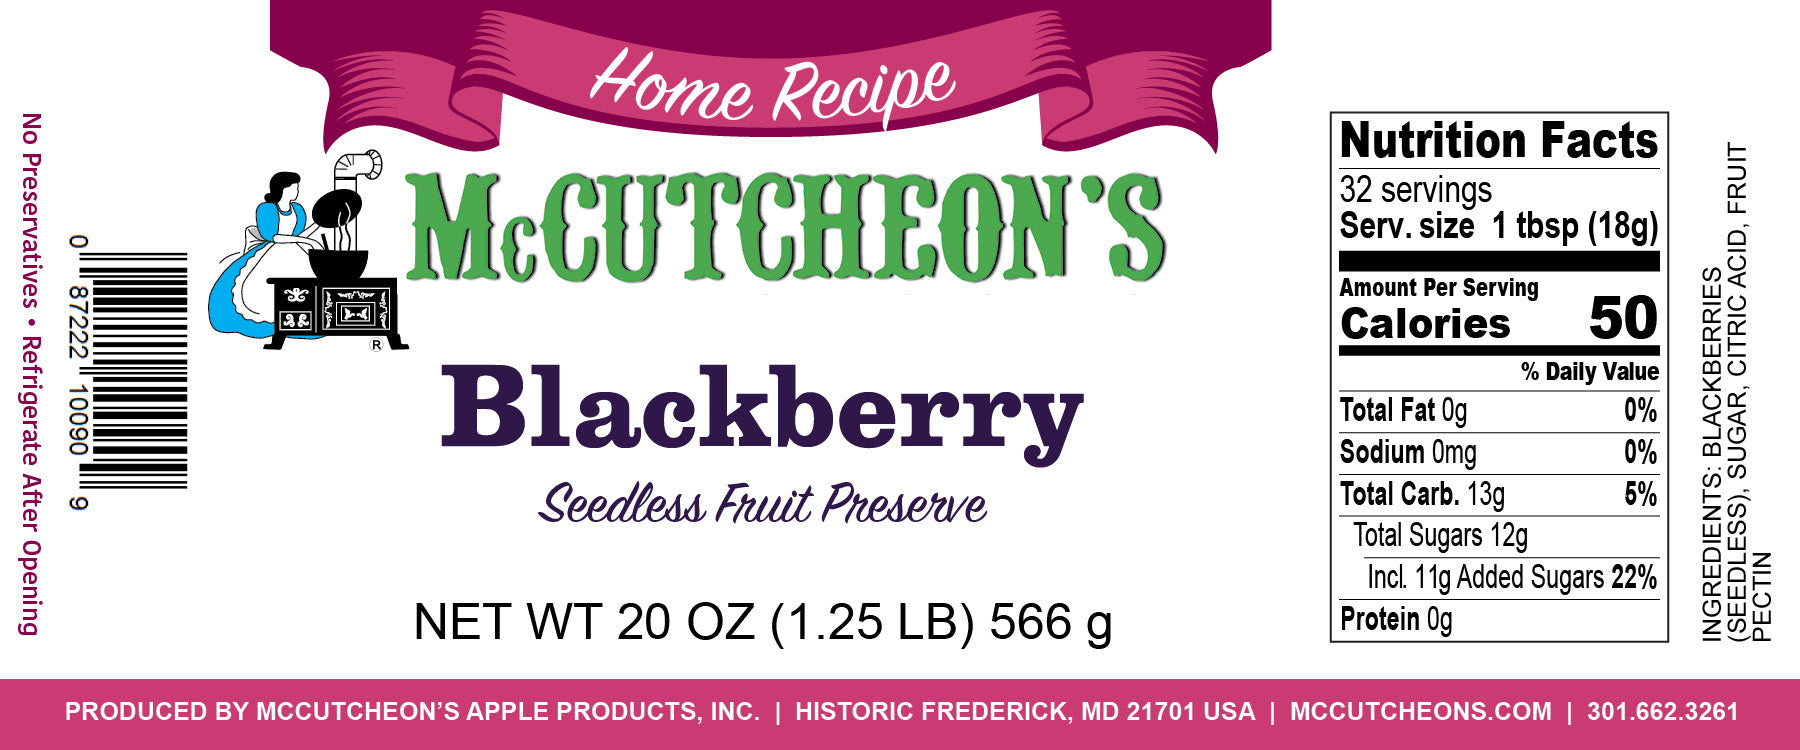 nutritional label for McCutcheon's Blackberry preserves